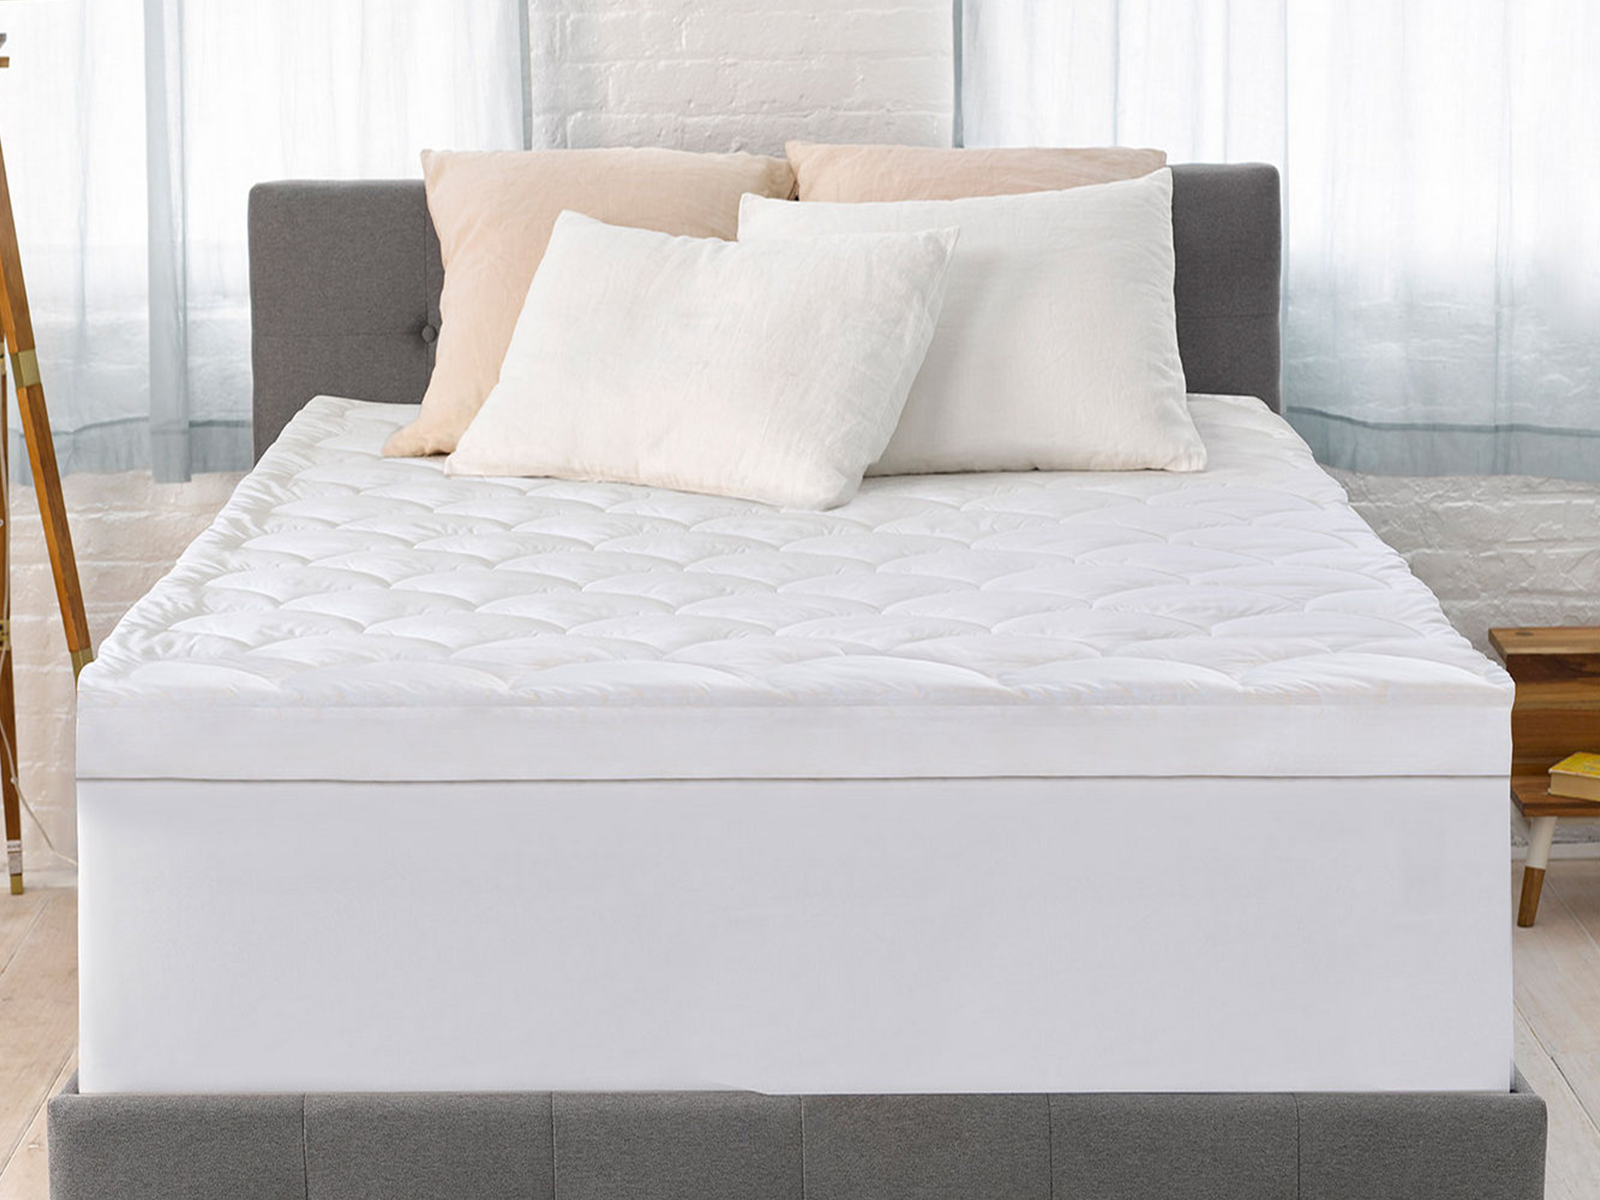 Serta Full 4 Inch Pillowtop and Memory Foam Mattress Topper